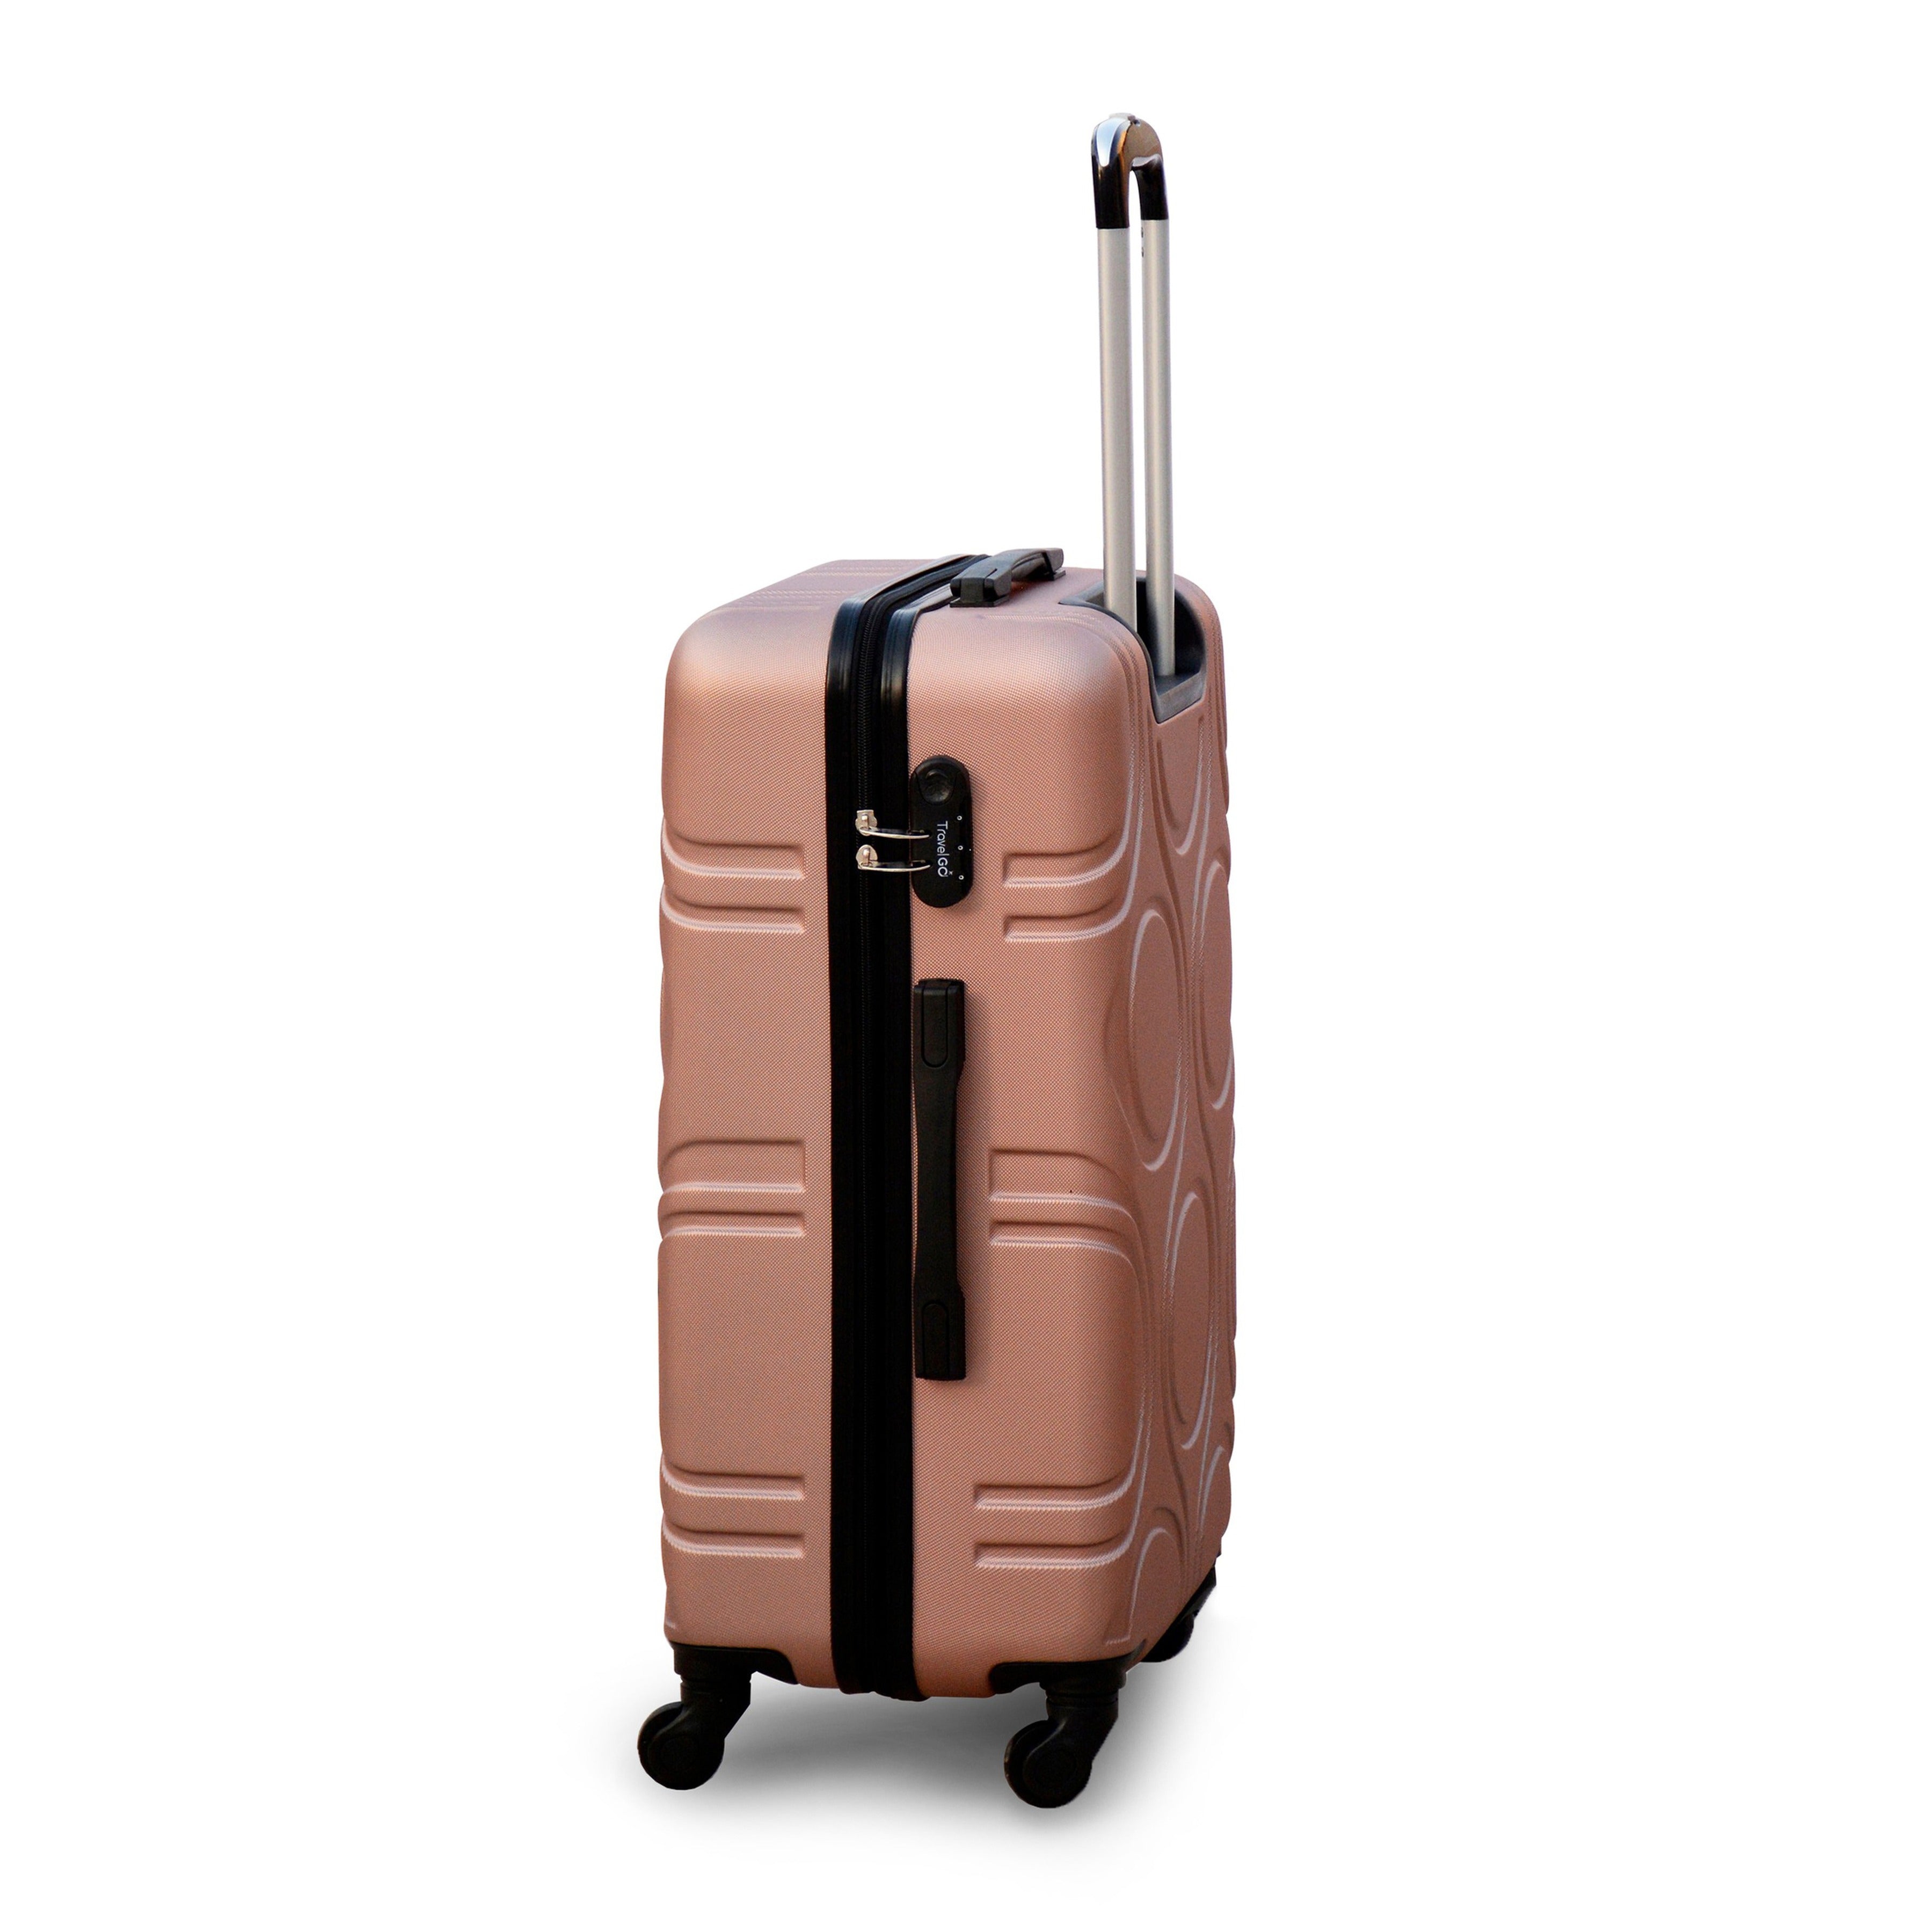 Yinton 2208 Rose Gold 20” Lightweight ABS Luggage | Hard Case Trolley Bag